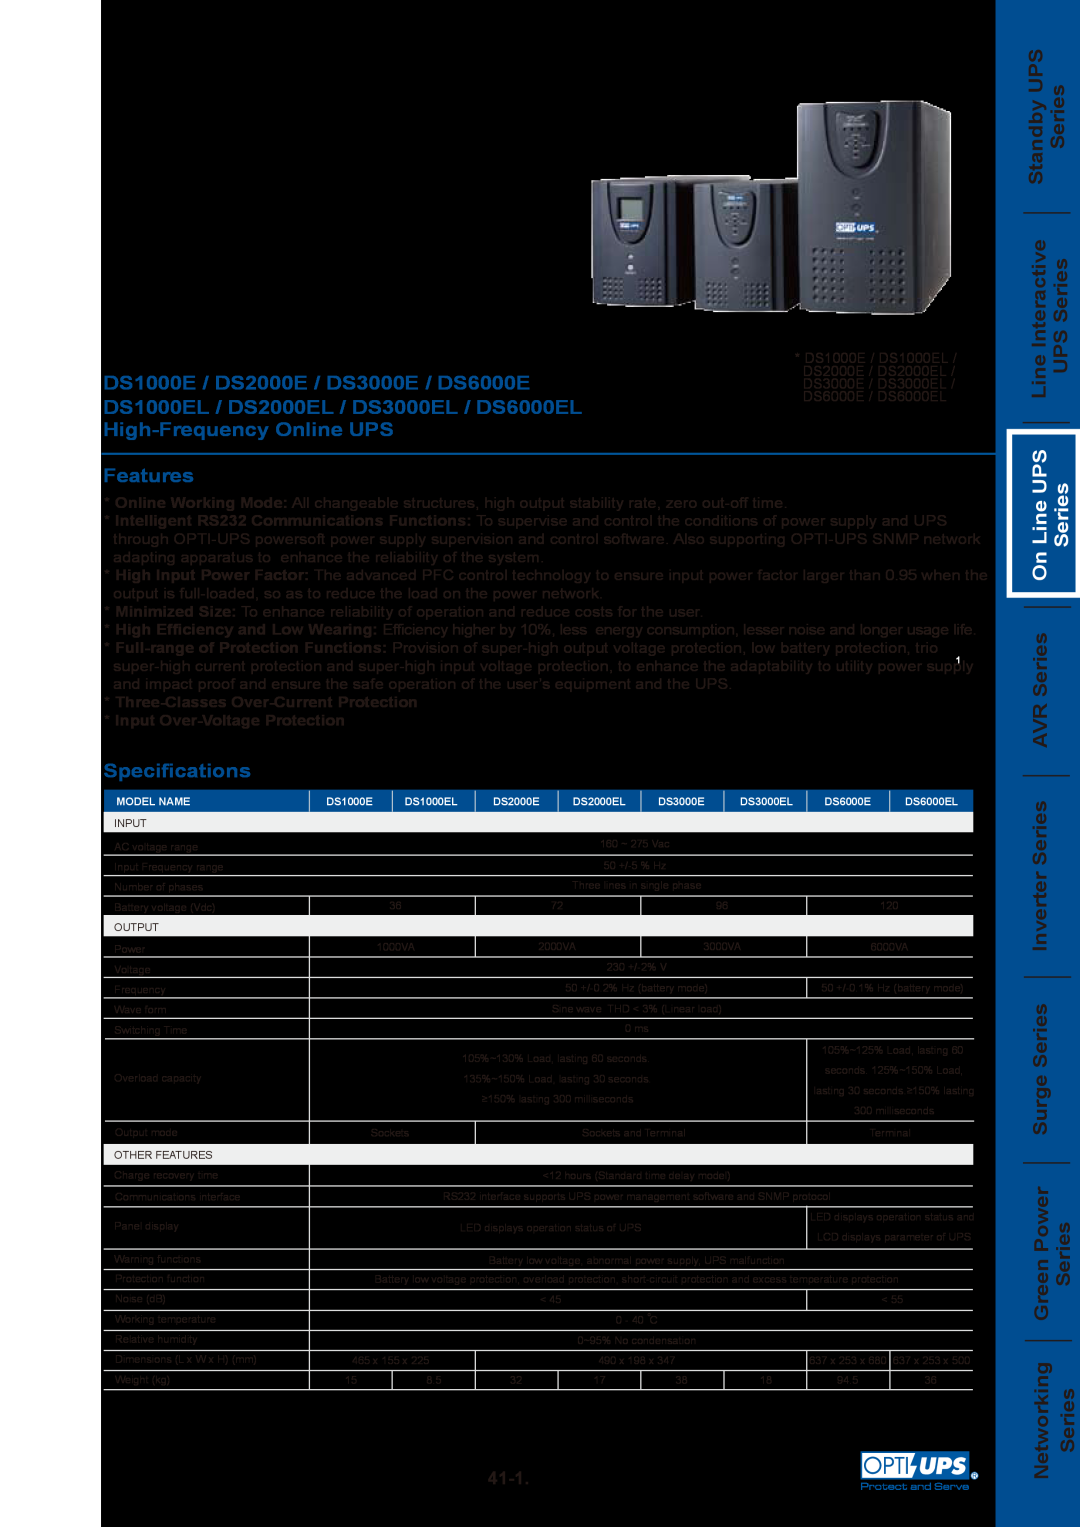 OPTI-UPS DS6000EL specifications UPS Series Series, Line UPS Series, DS1000E / DS2000E / DS3000E / DS6000E, Features, 41-1 